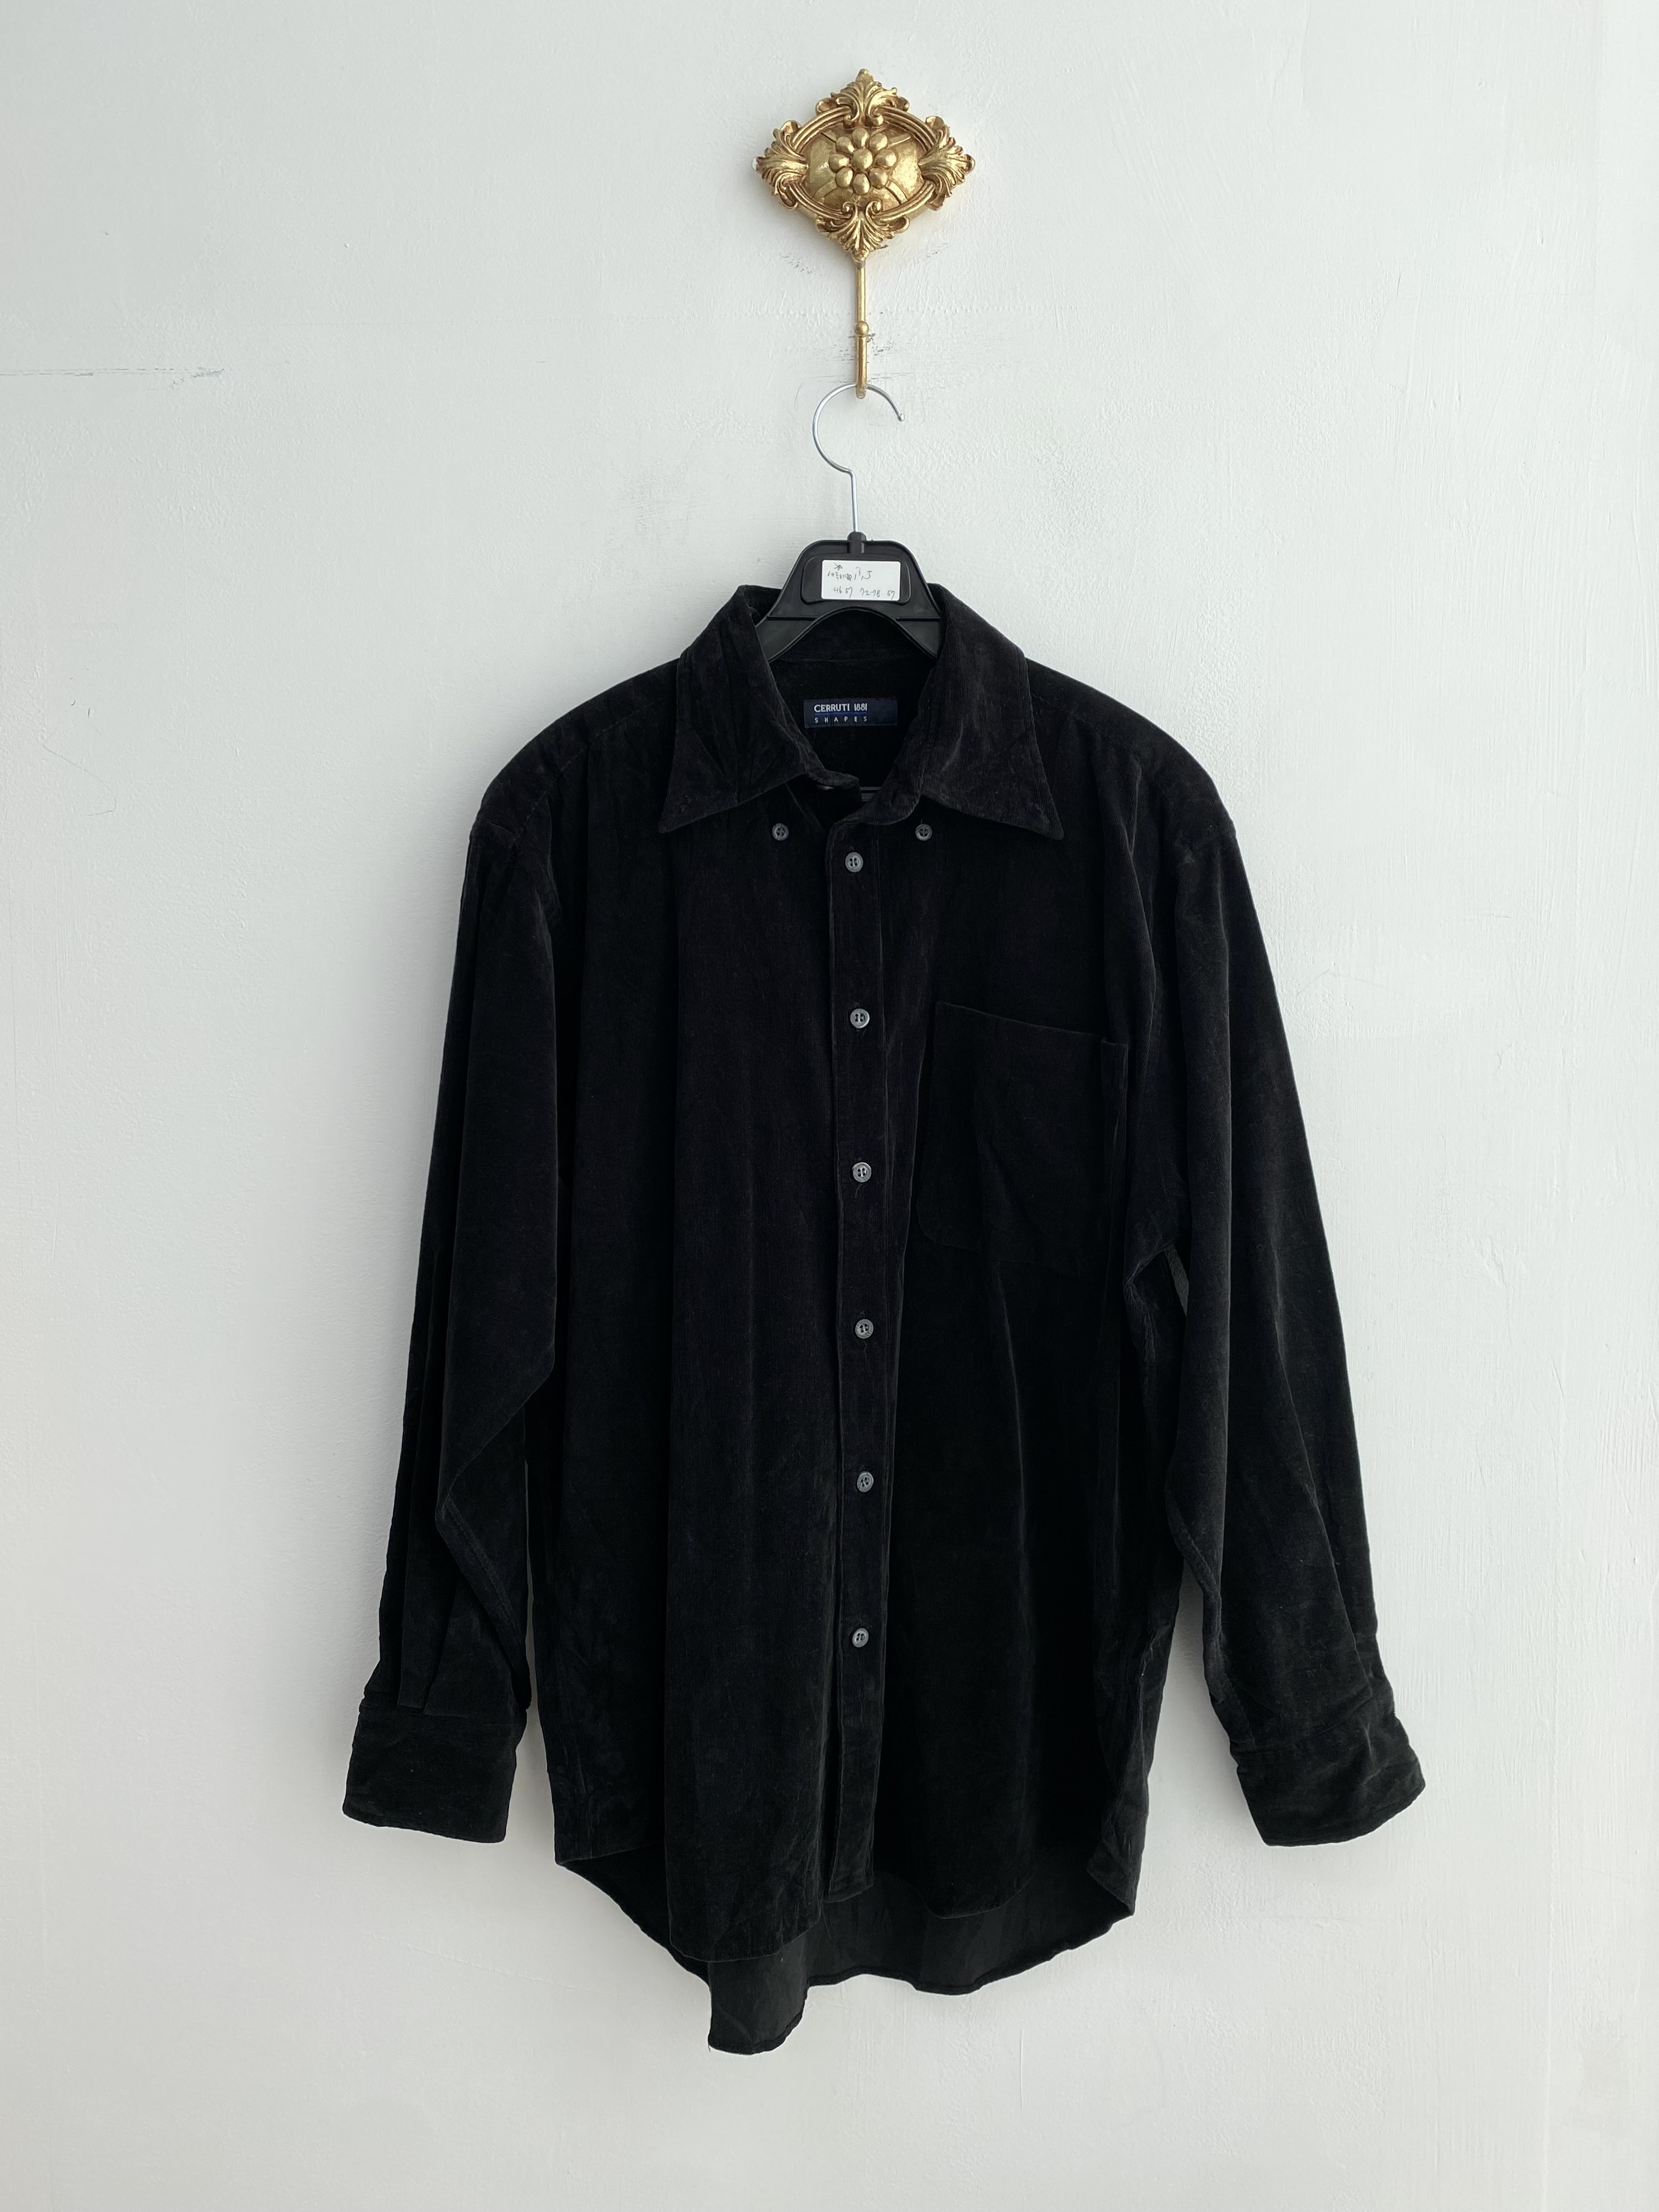 Cerruti 1881 black corduroy pocket boxy shirt